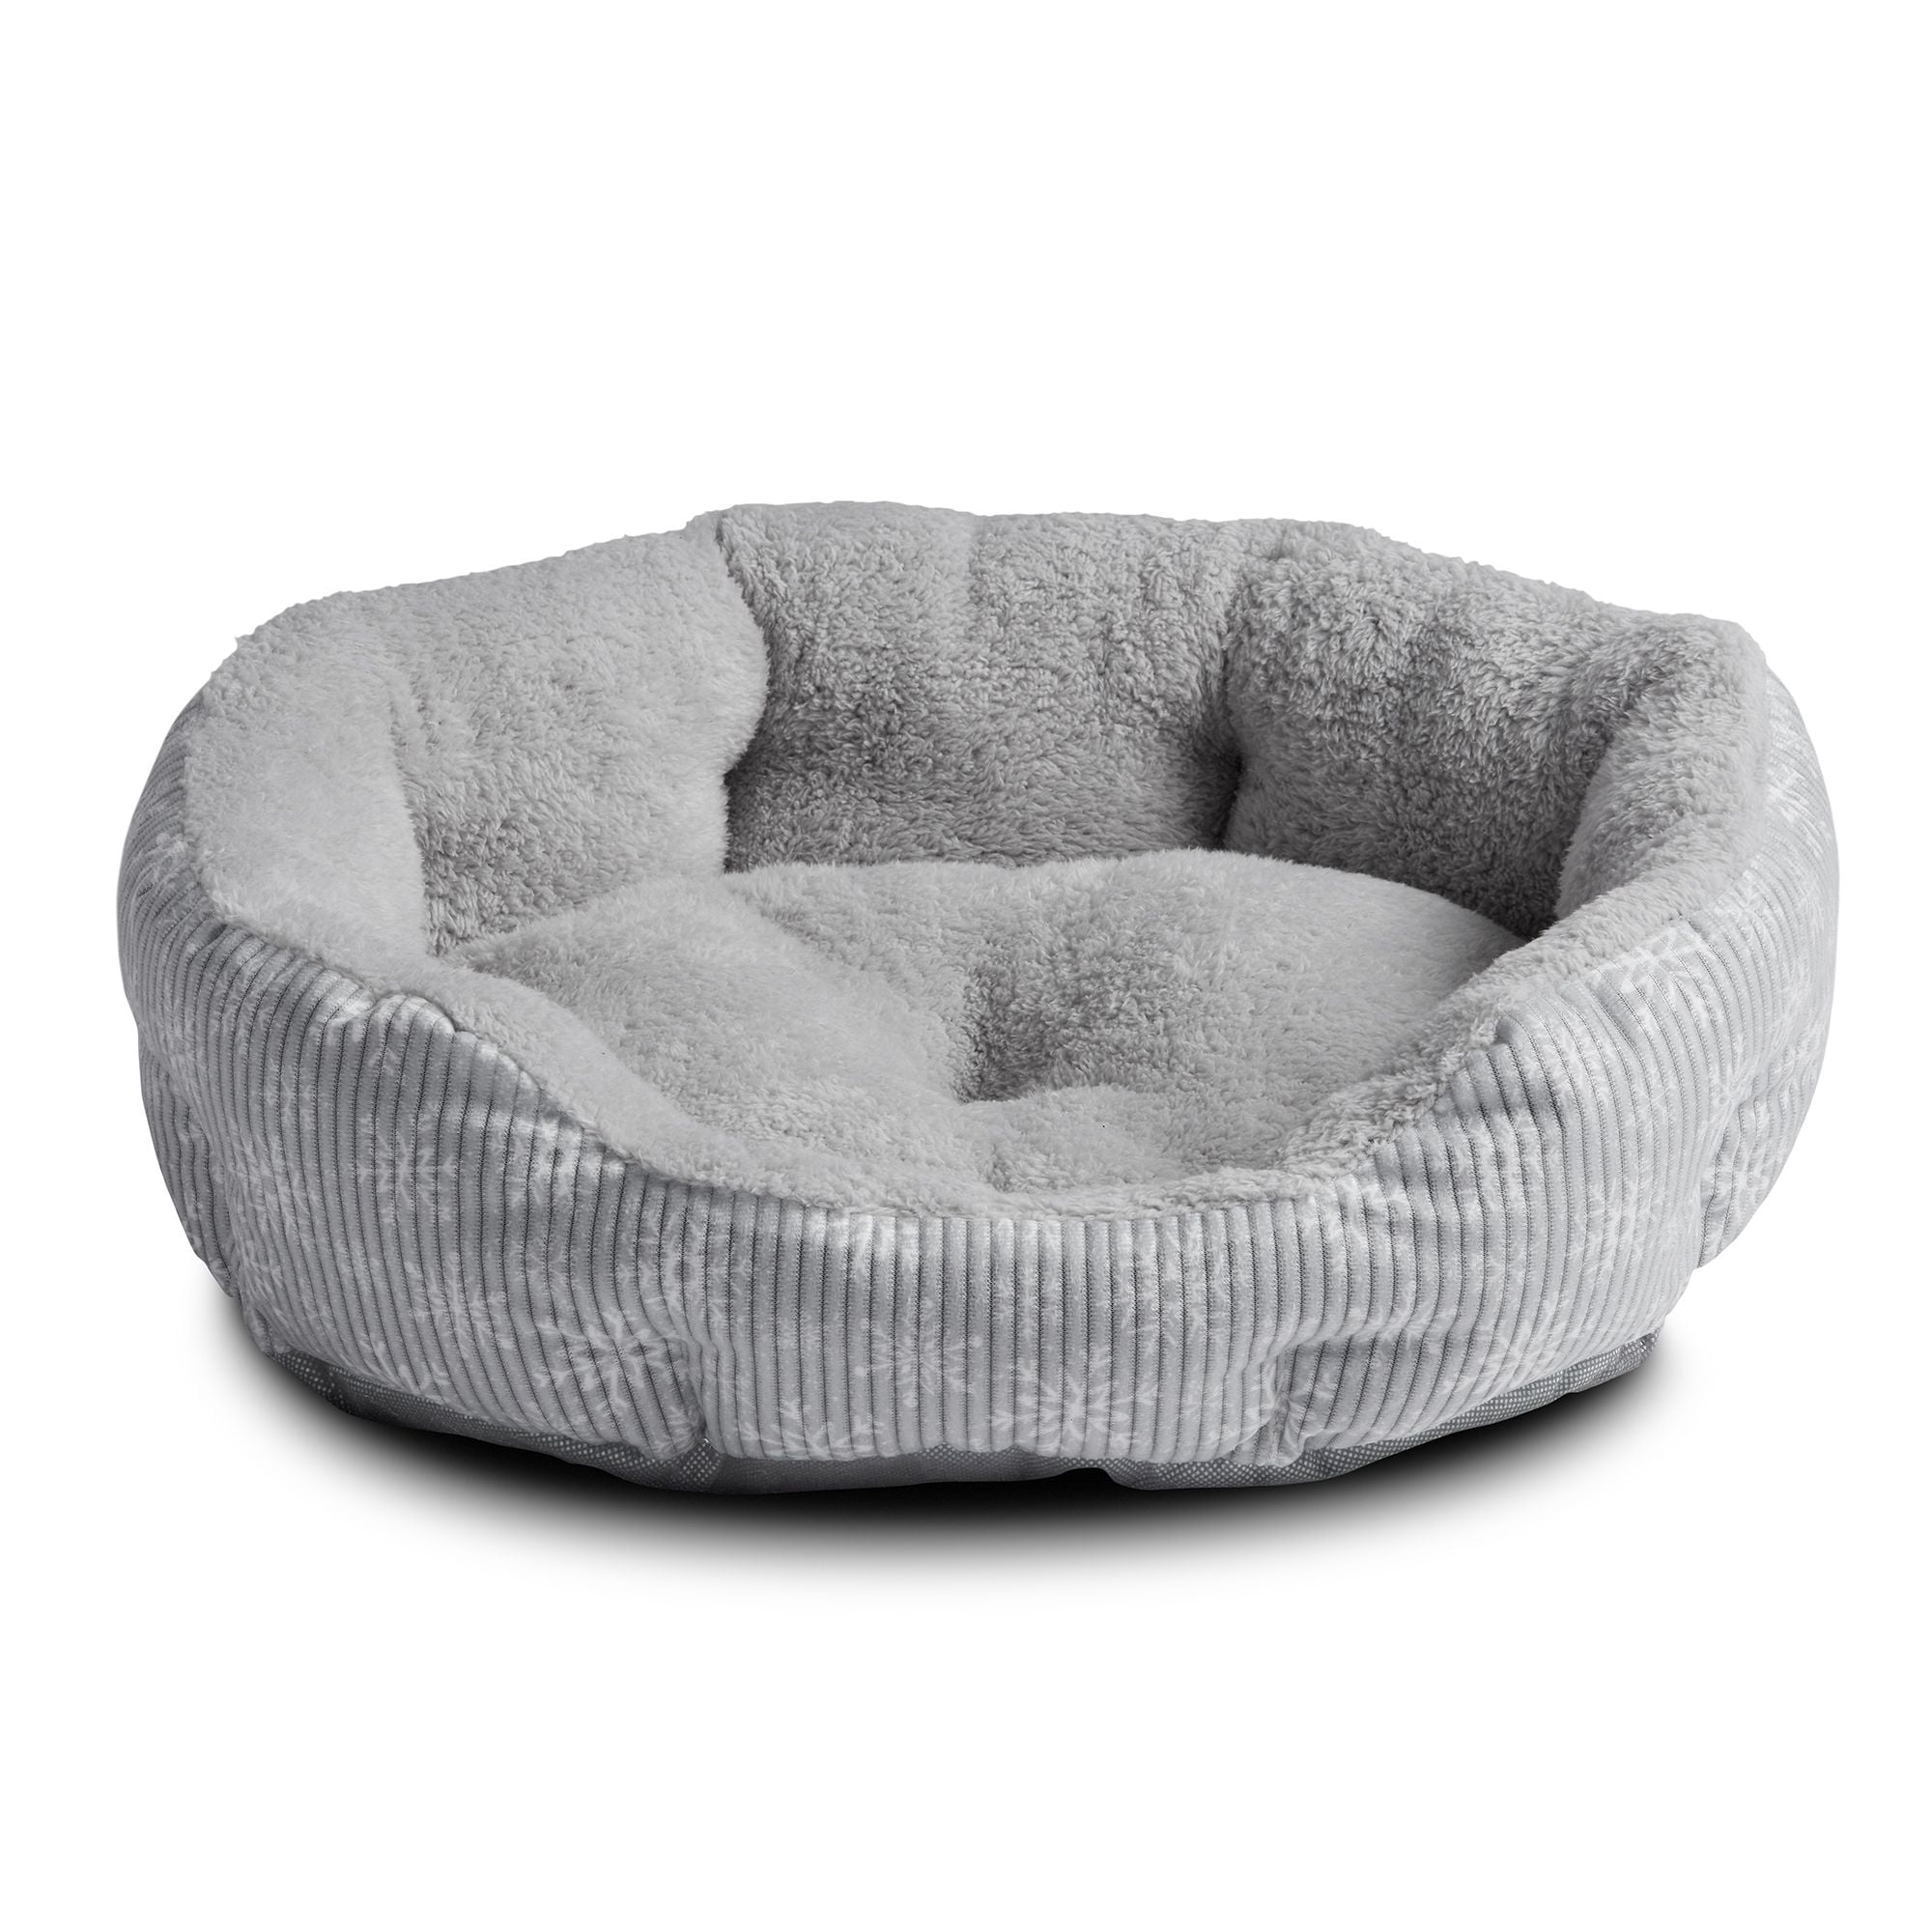 Cuddler Pet Bed - Cloud Pet Bed - Shop - Products - Lines & Nines